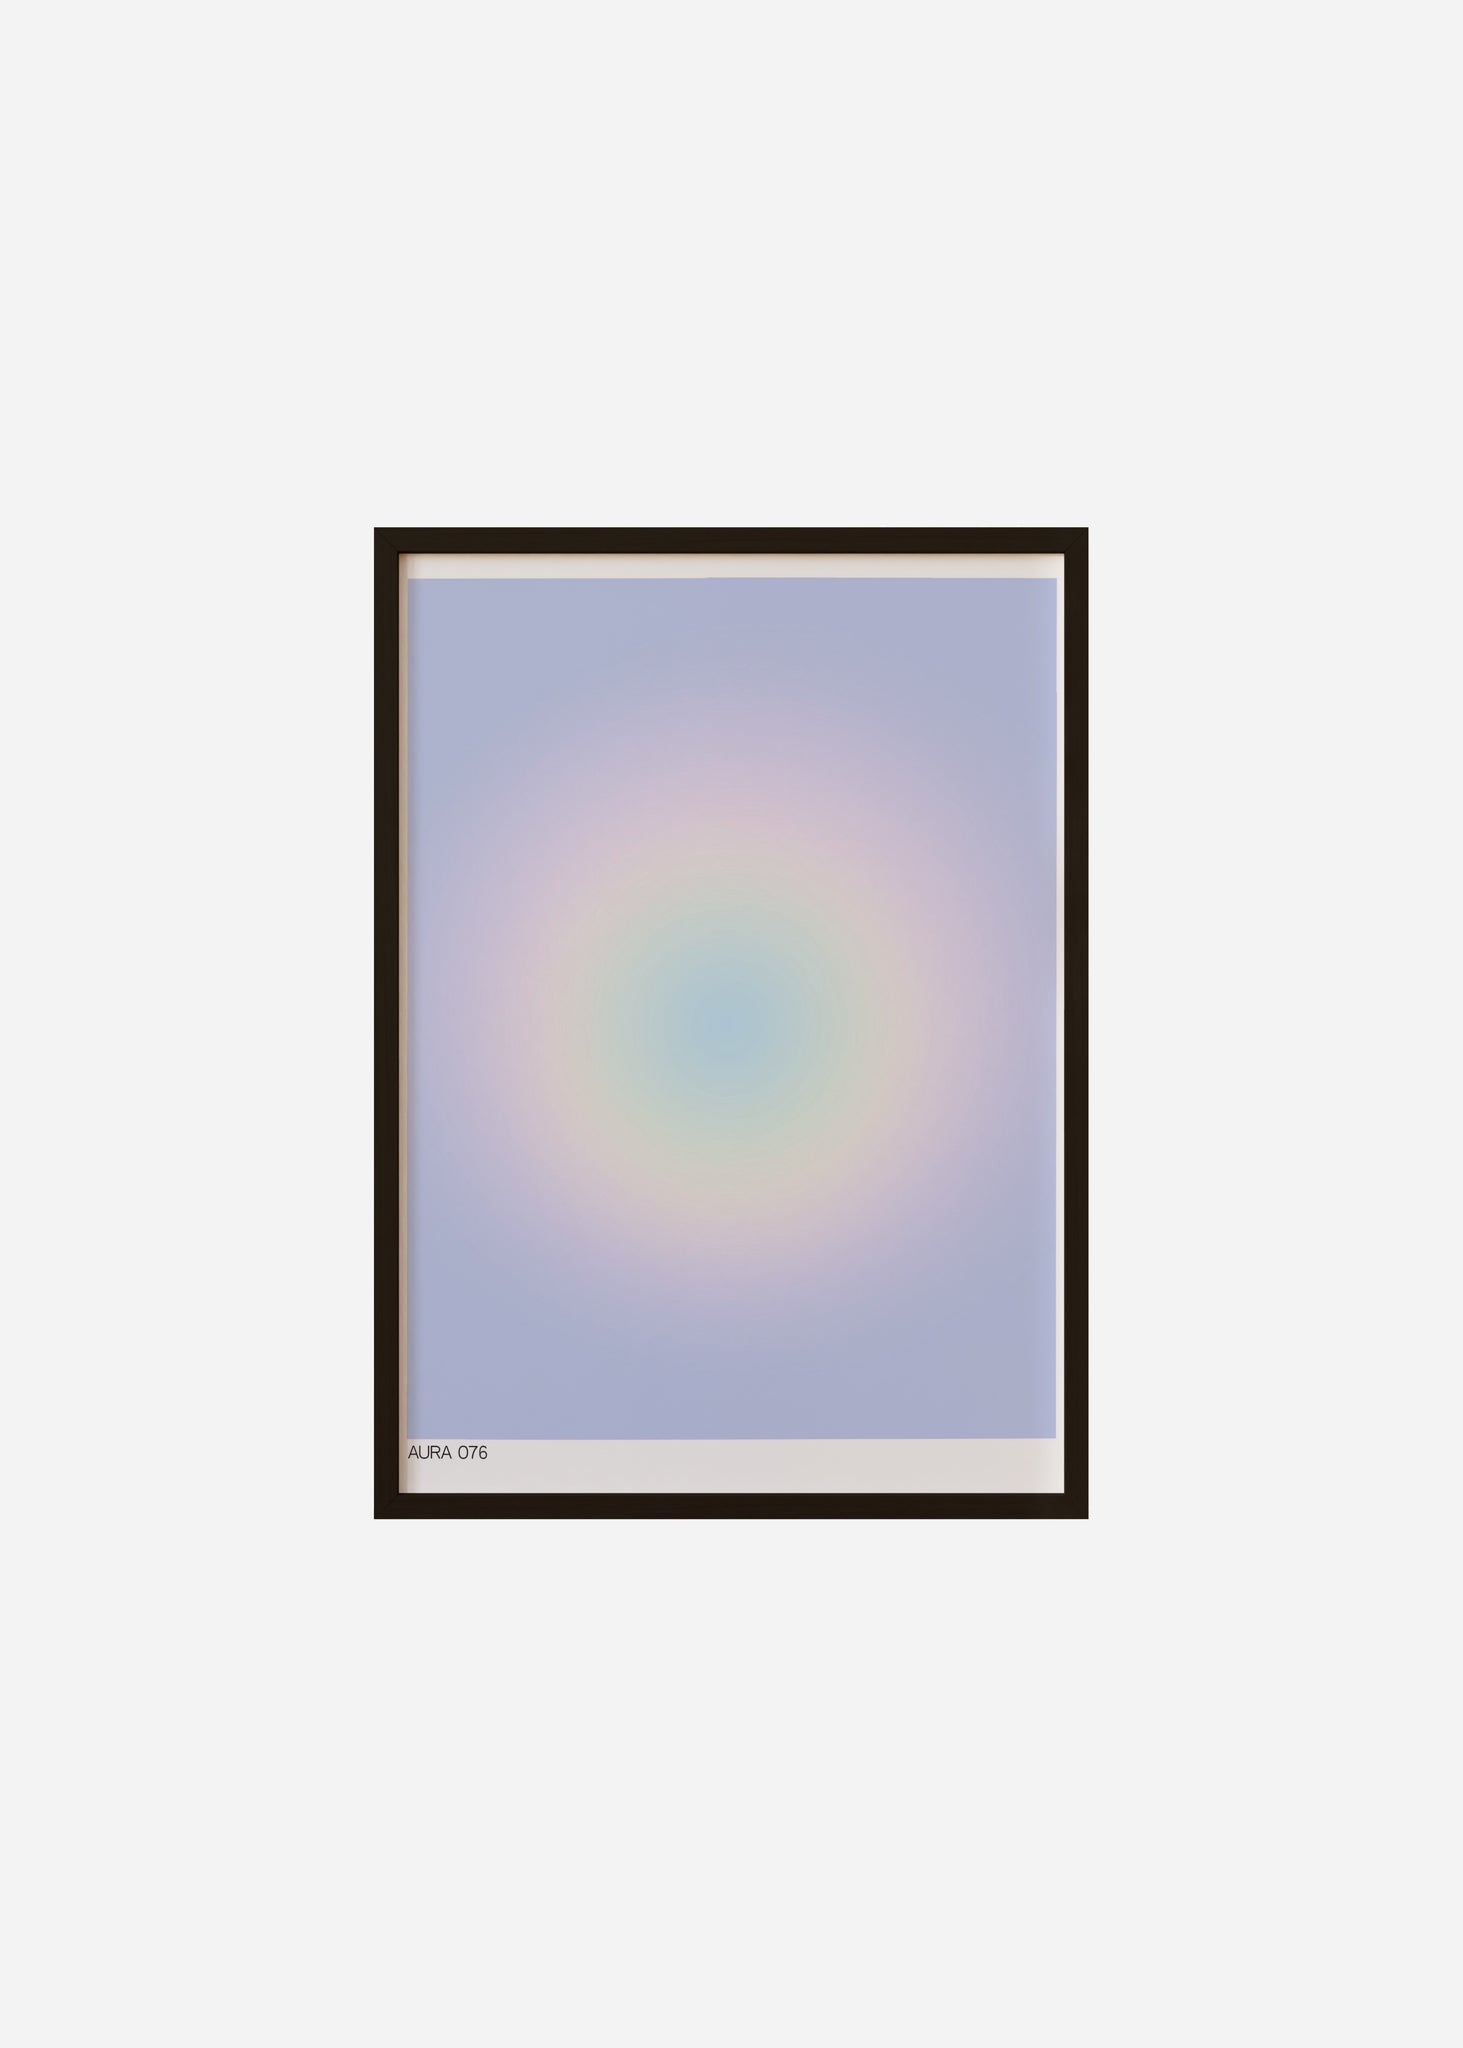 aura 076 Framed Print